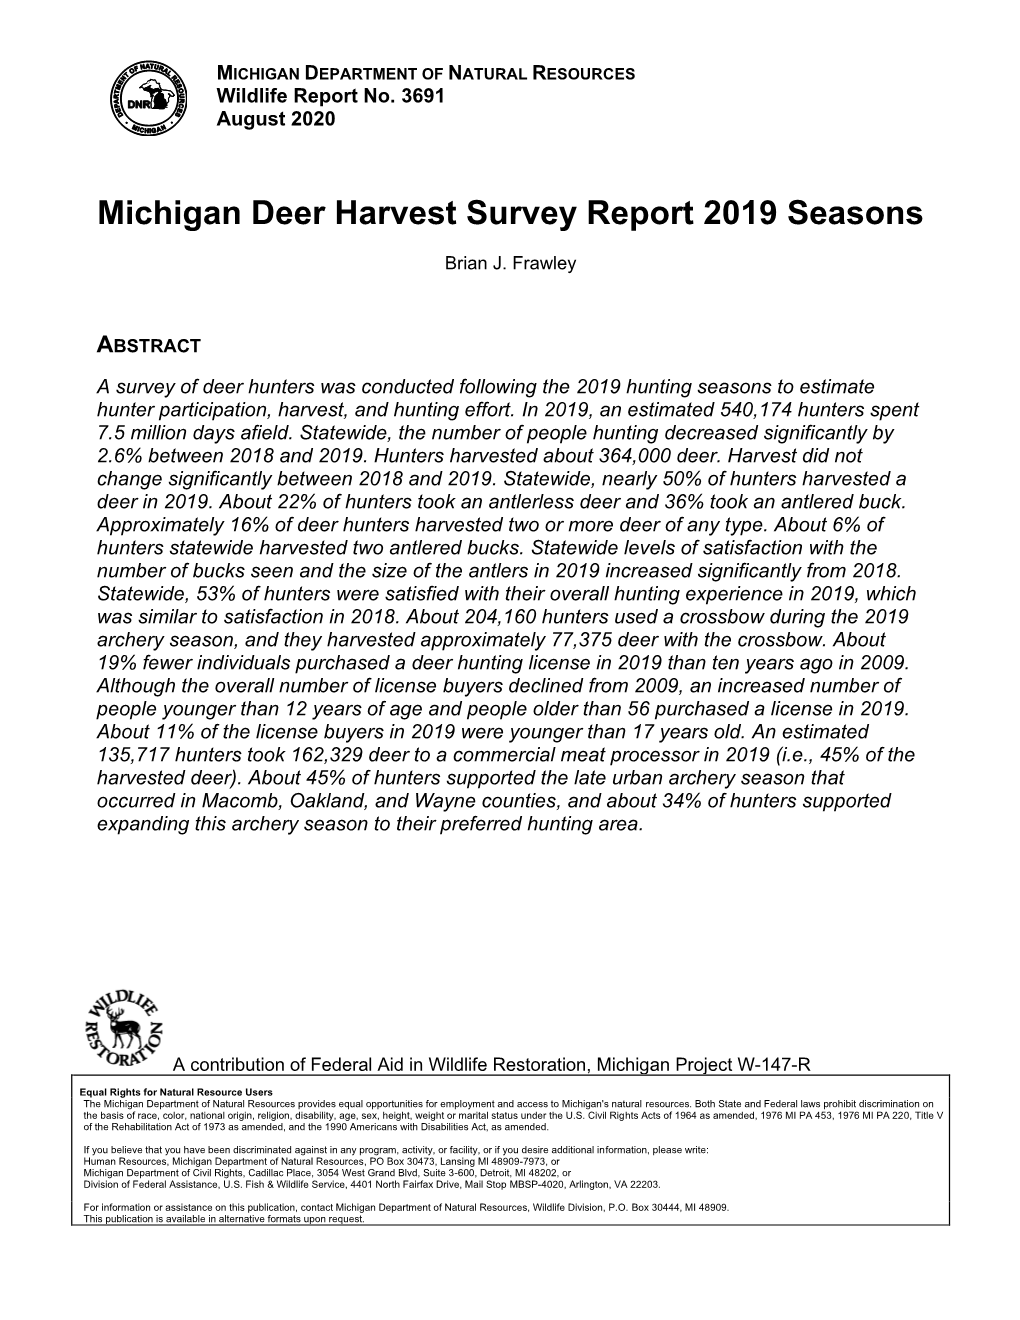 2019 Deer Harvest Survey Report